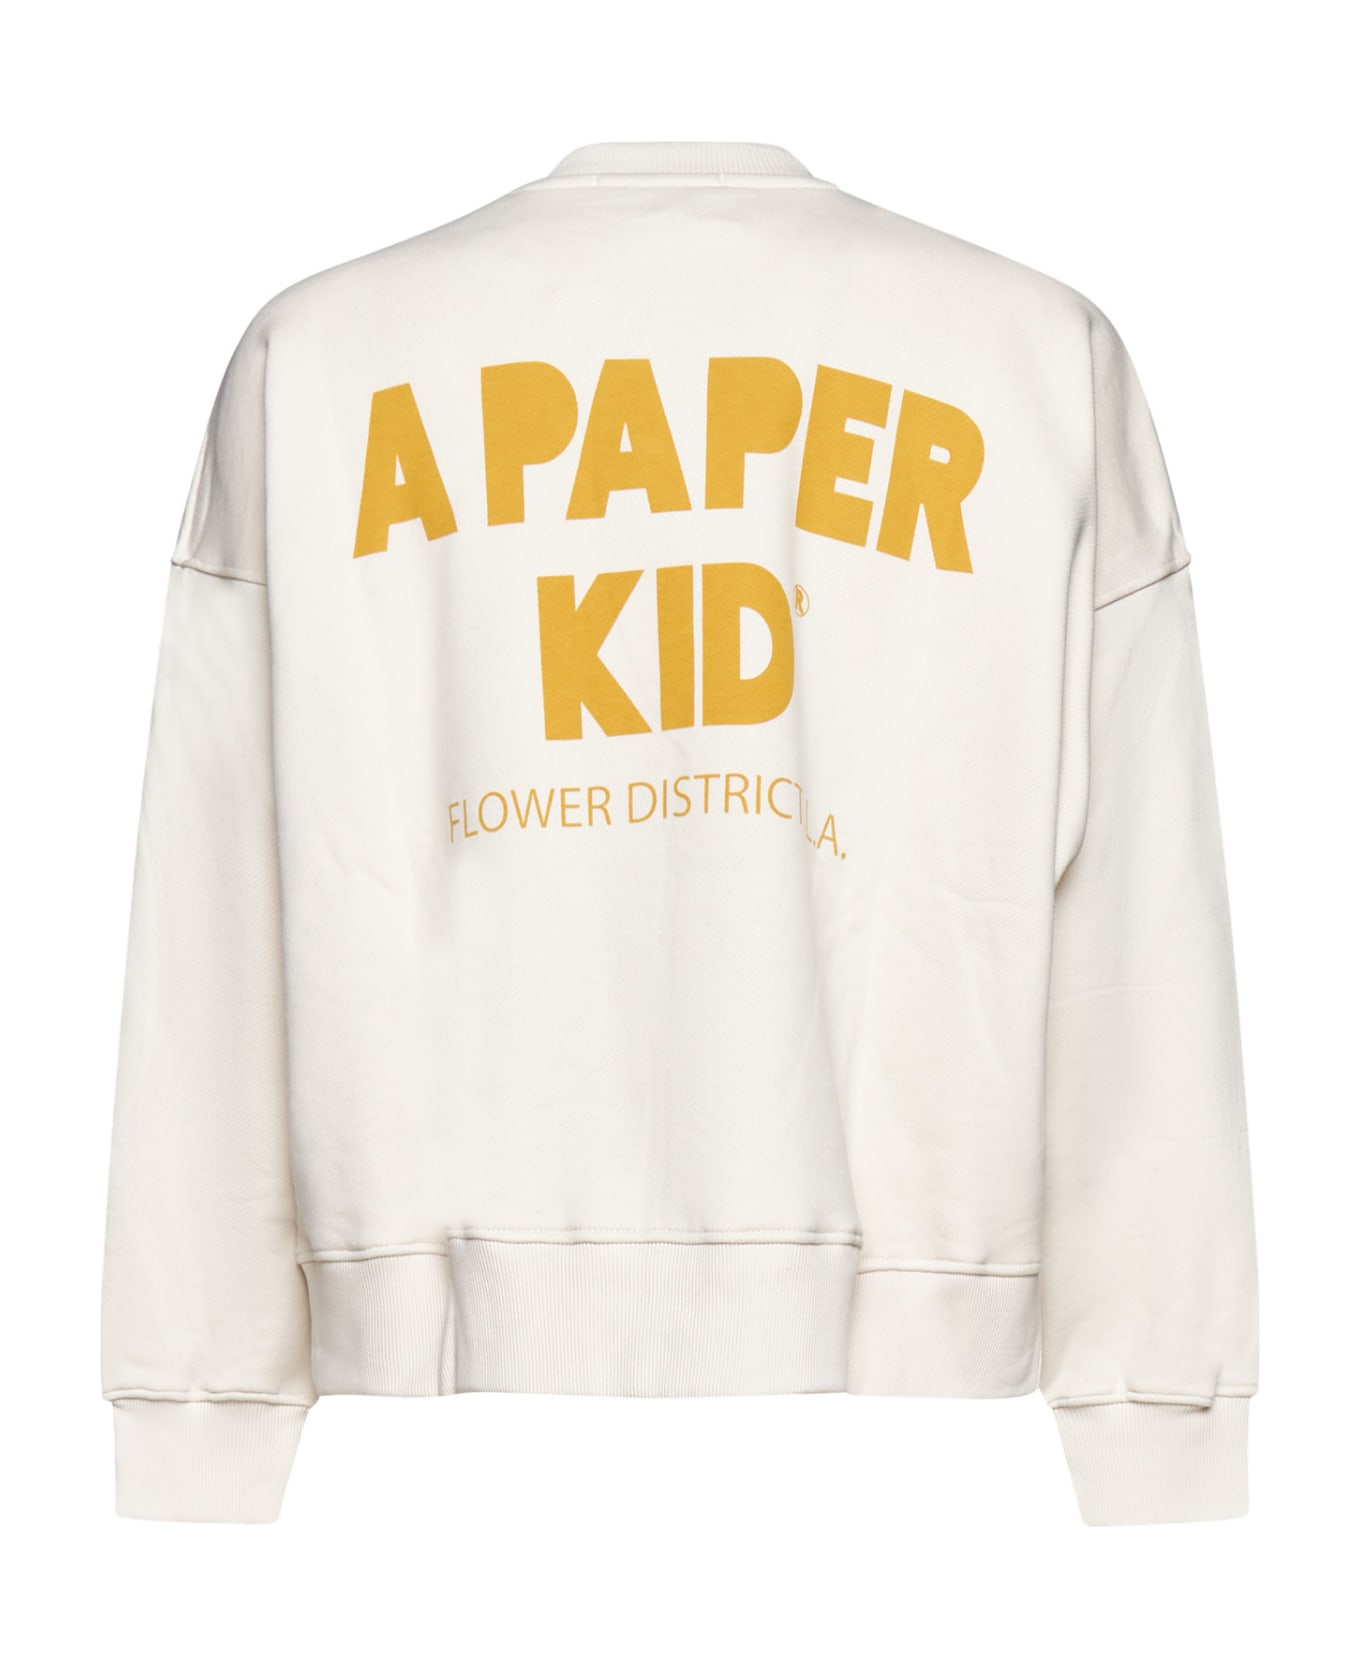 A Paper Kid Fleece - Cream